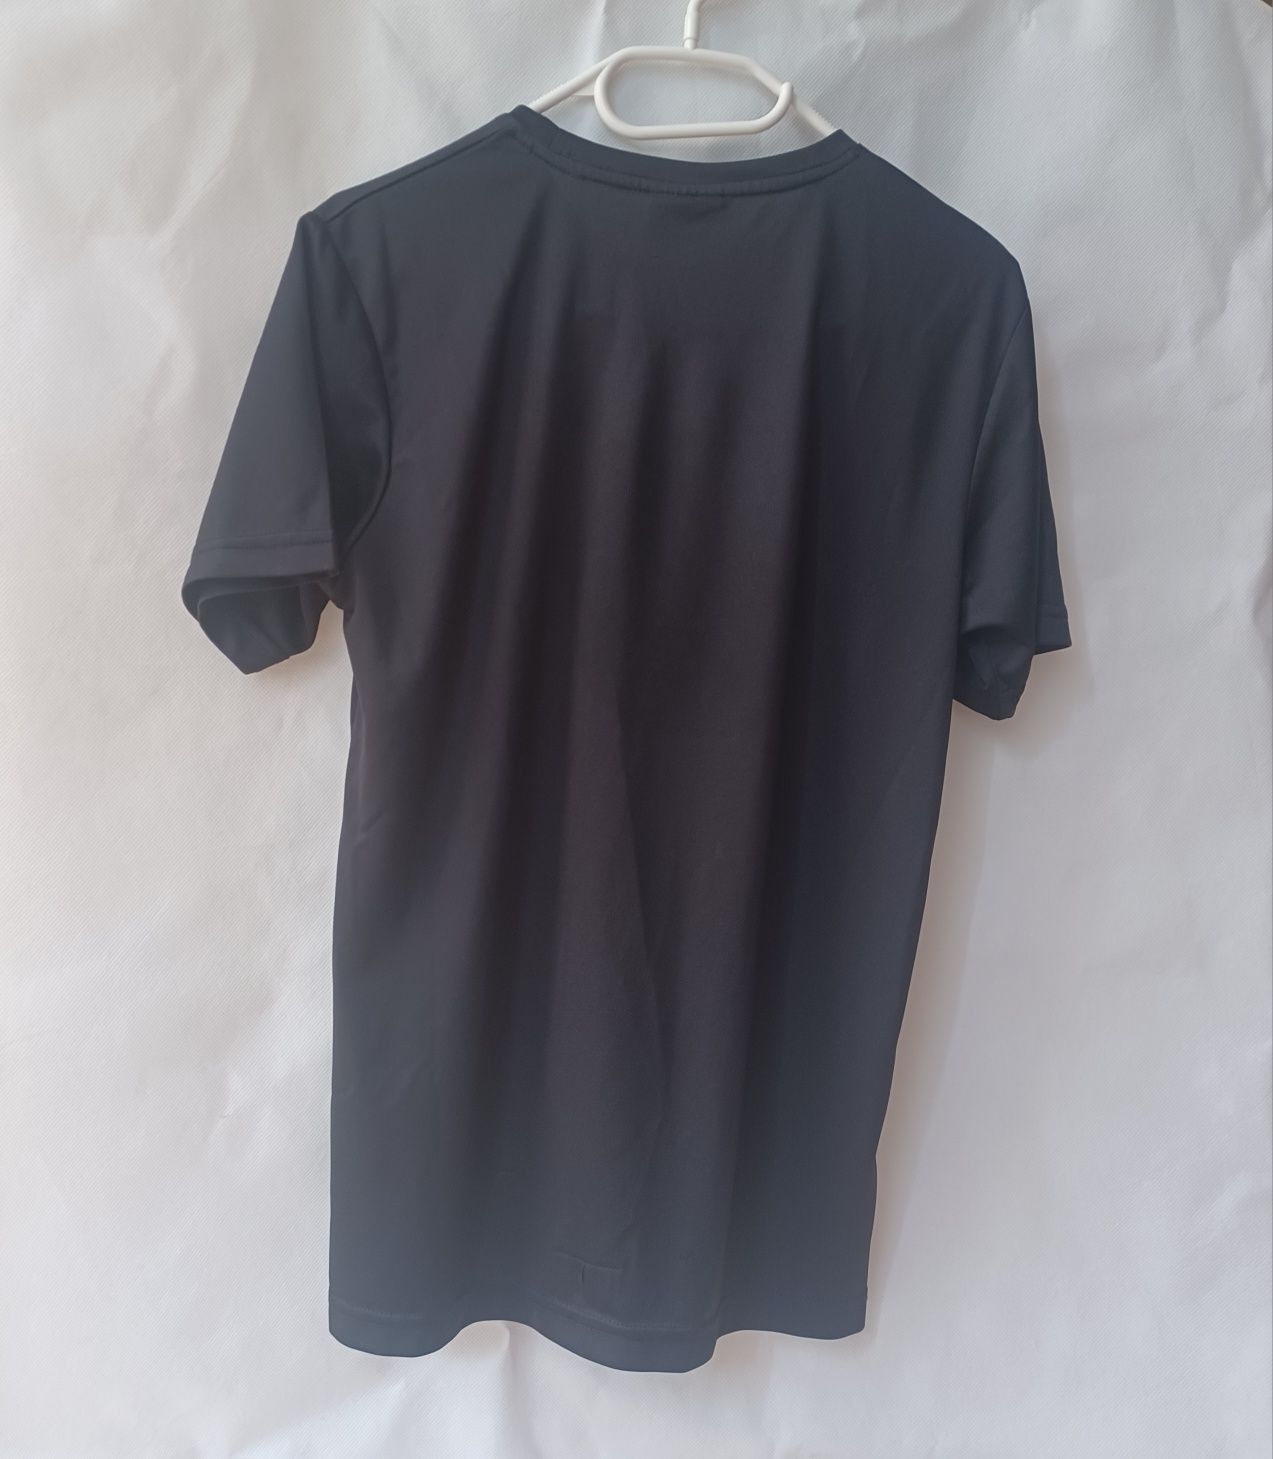 Martes czarna koszulka podkoszulek bluzka sportowa treningowa 164 S